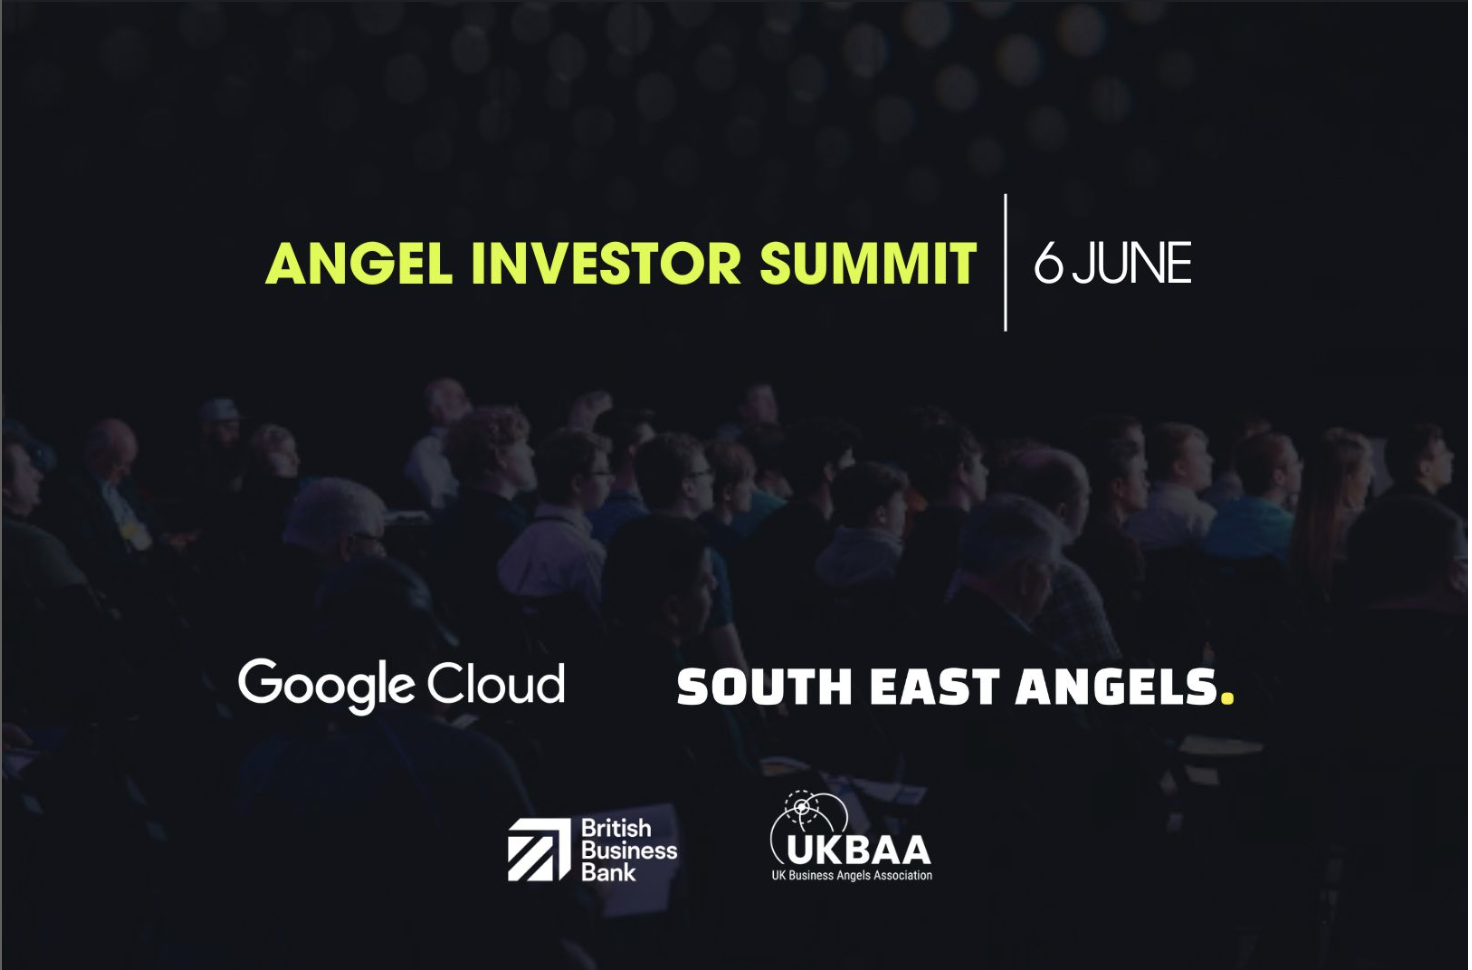 Angel Investor Summit - South East Angels